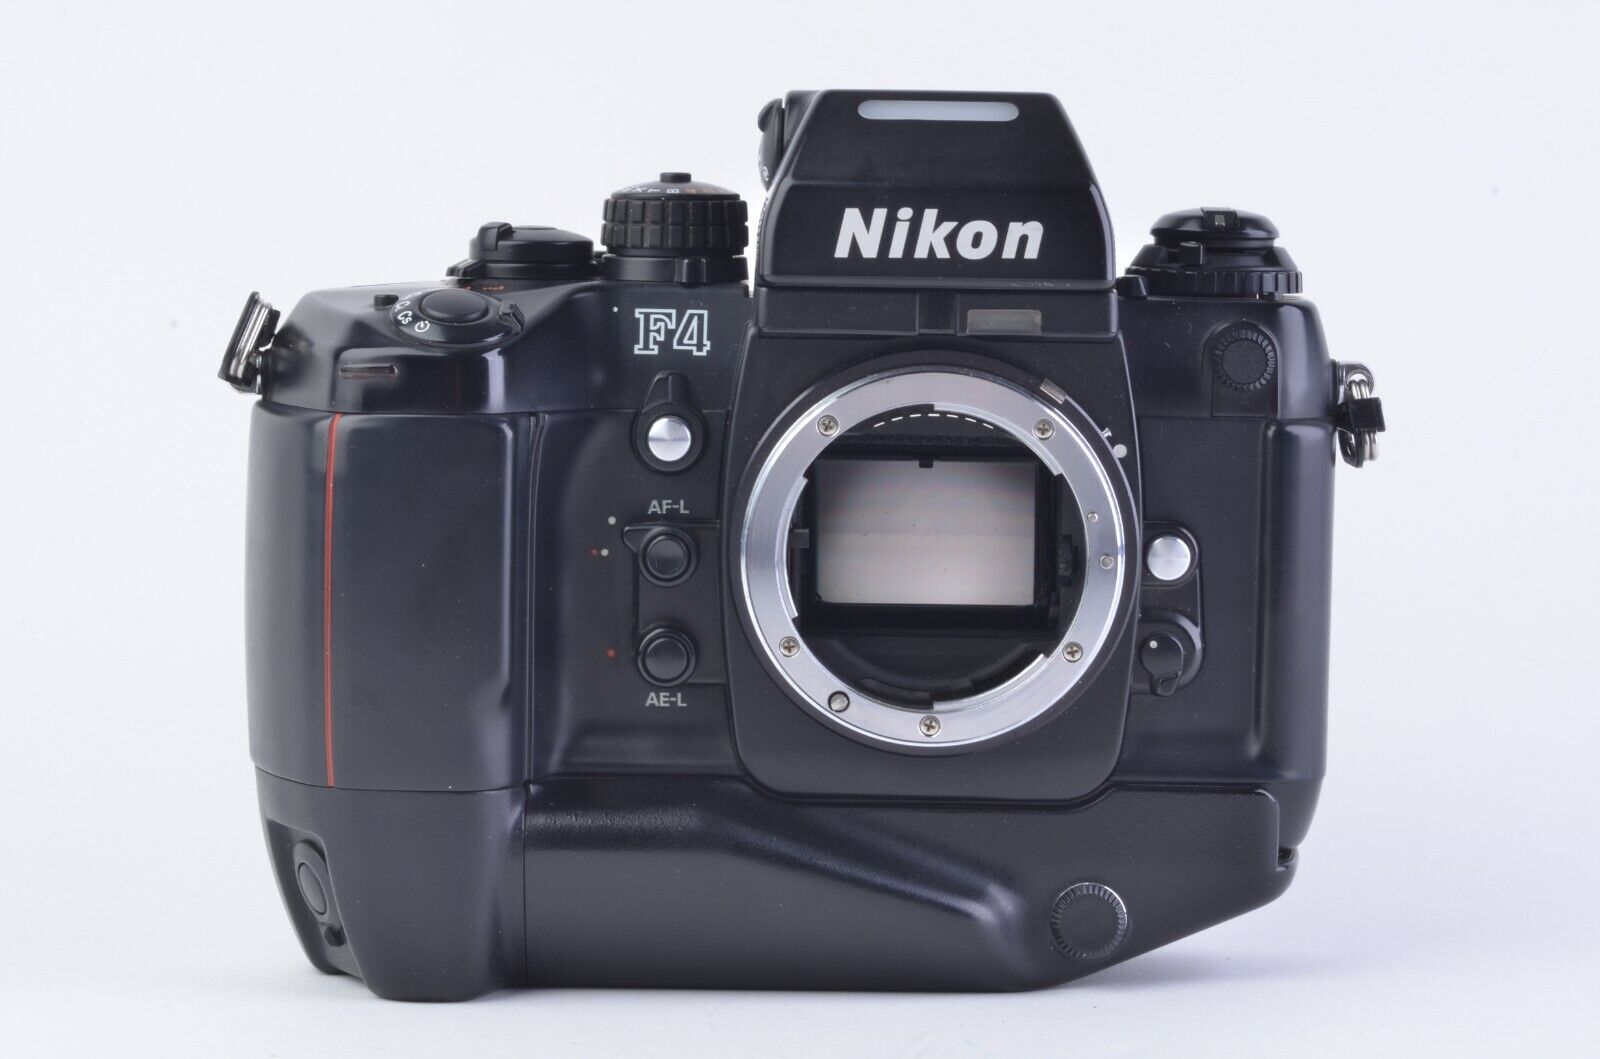 Nikon F4s 35mm SLR body